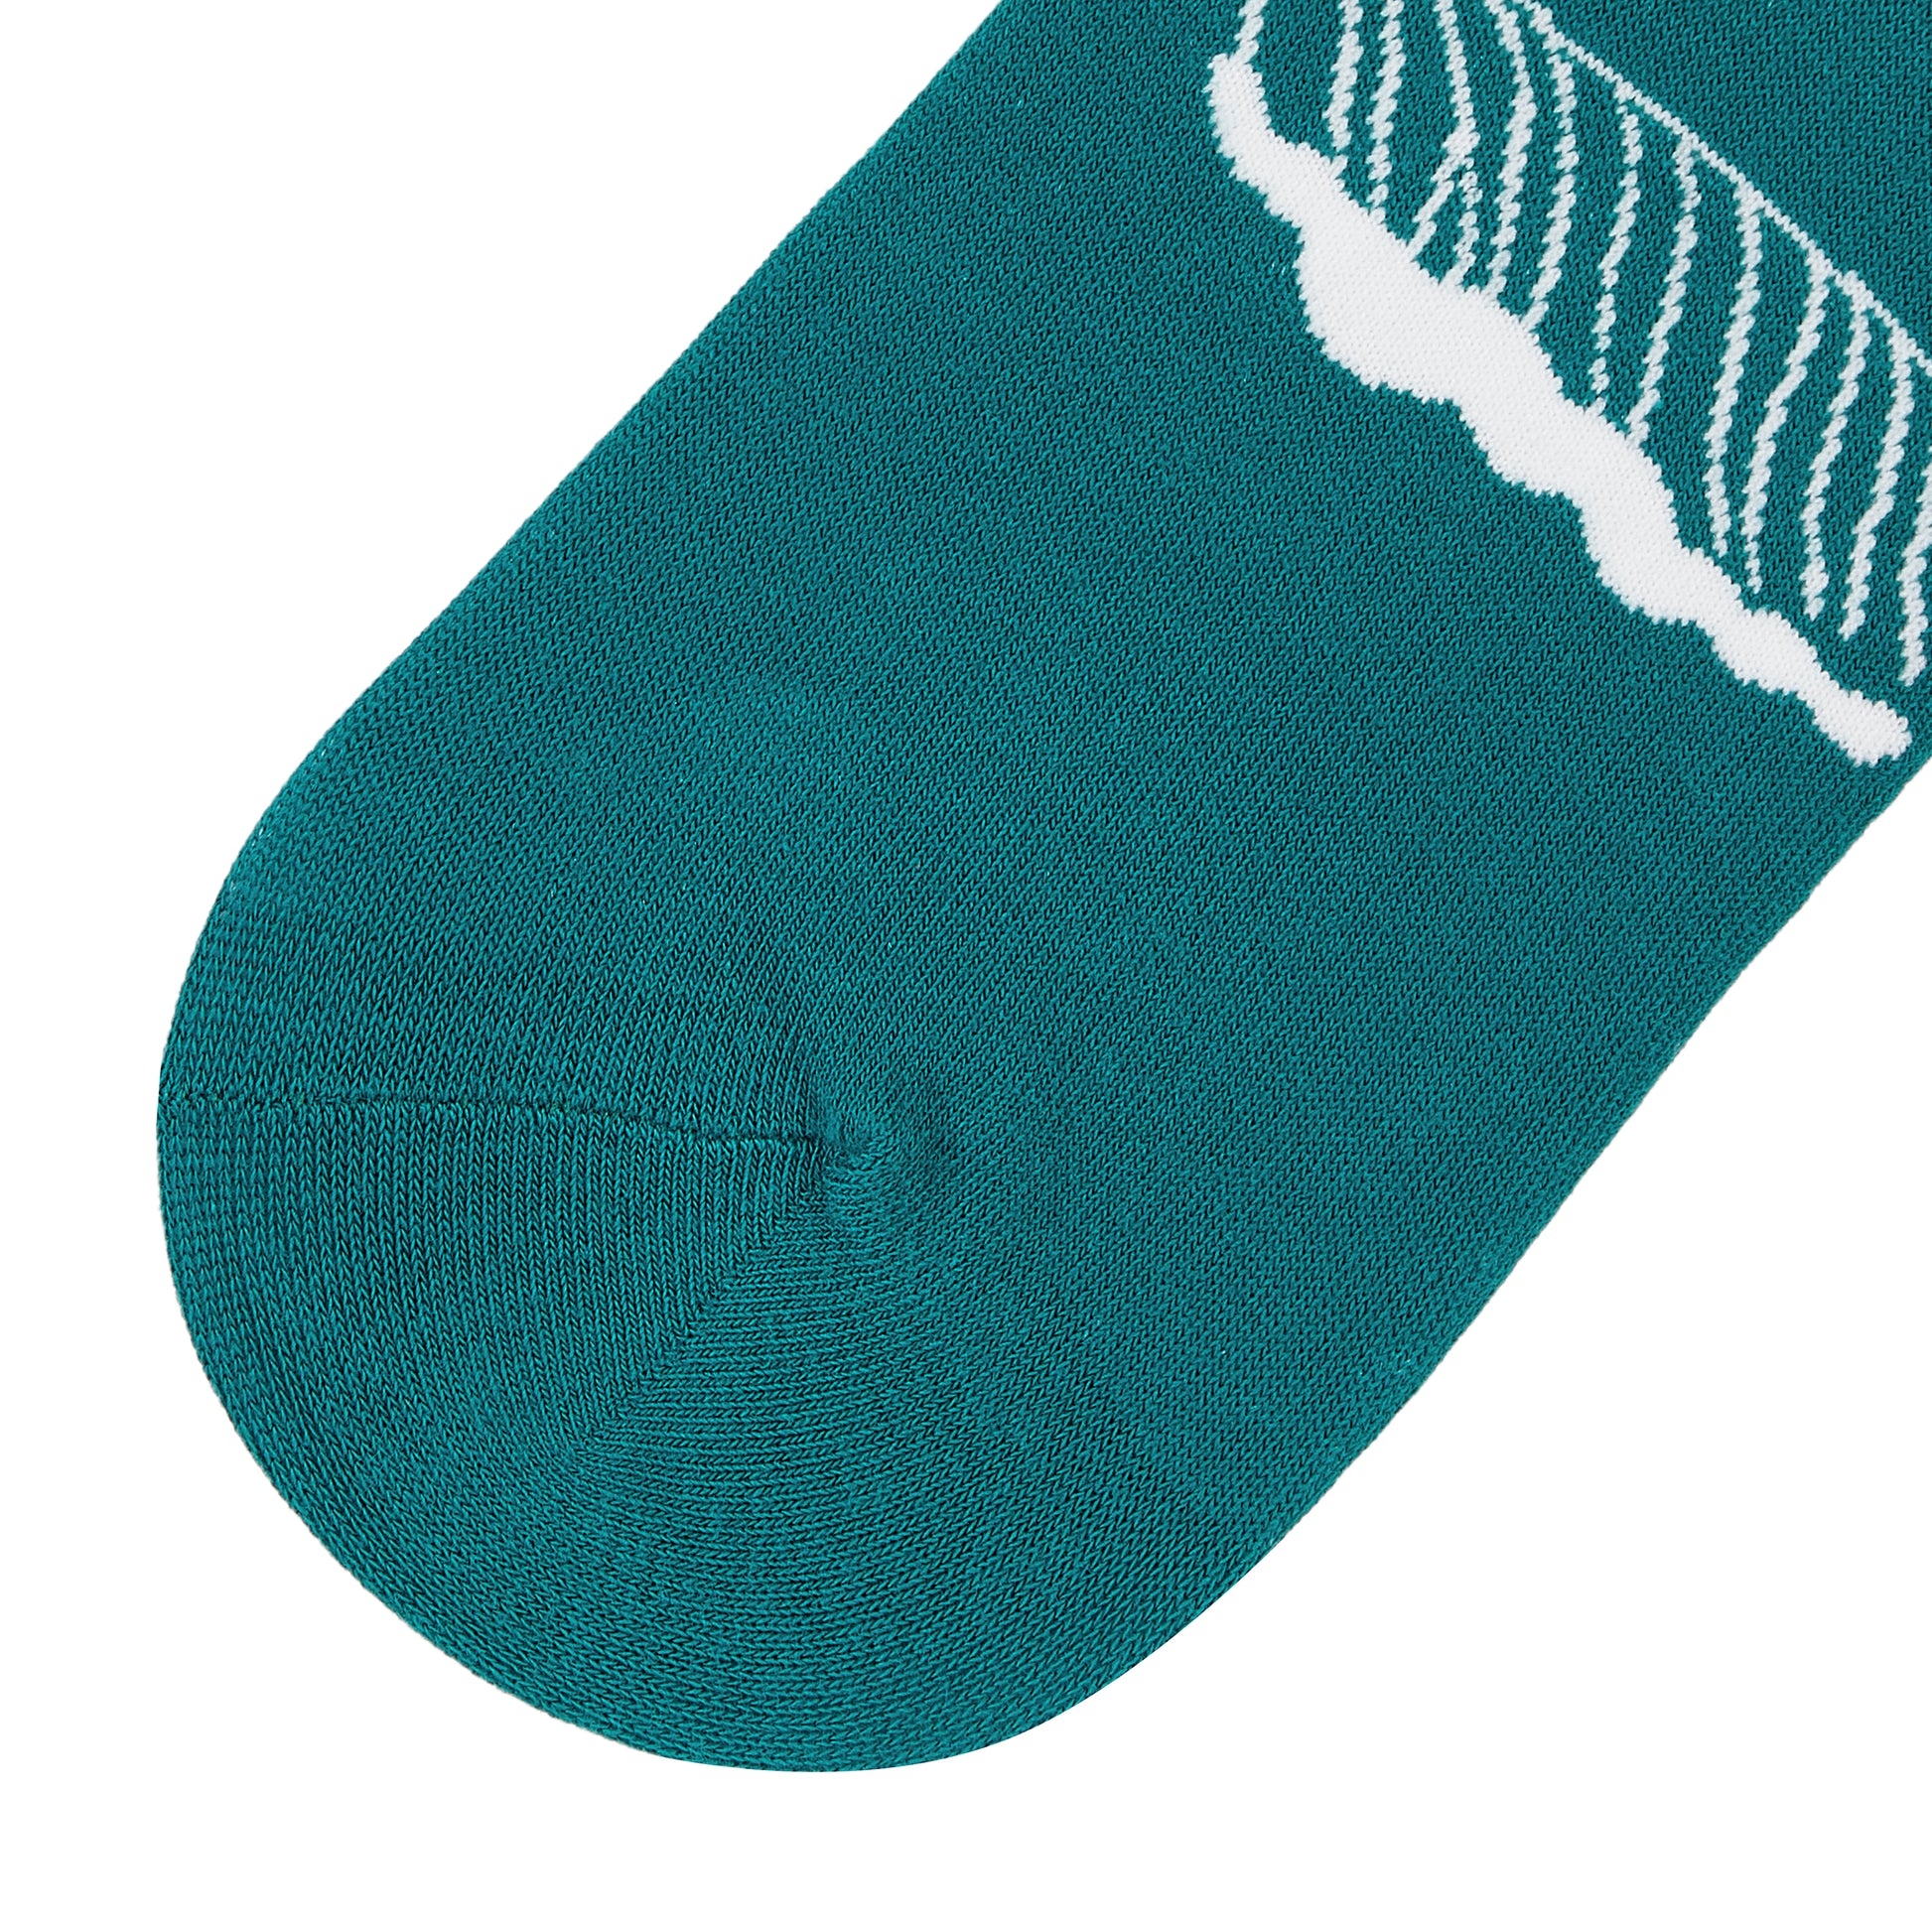 Surfin' USA Printed Quarter Length Socks - IDENTITY Apparel Shop